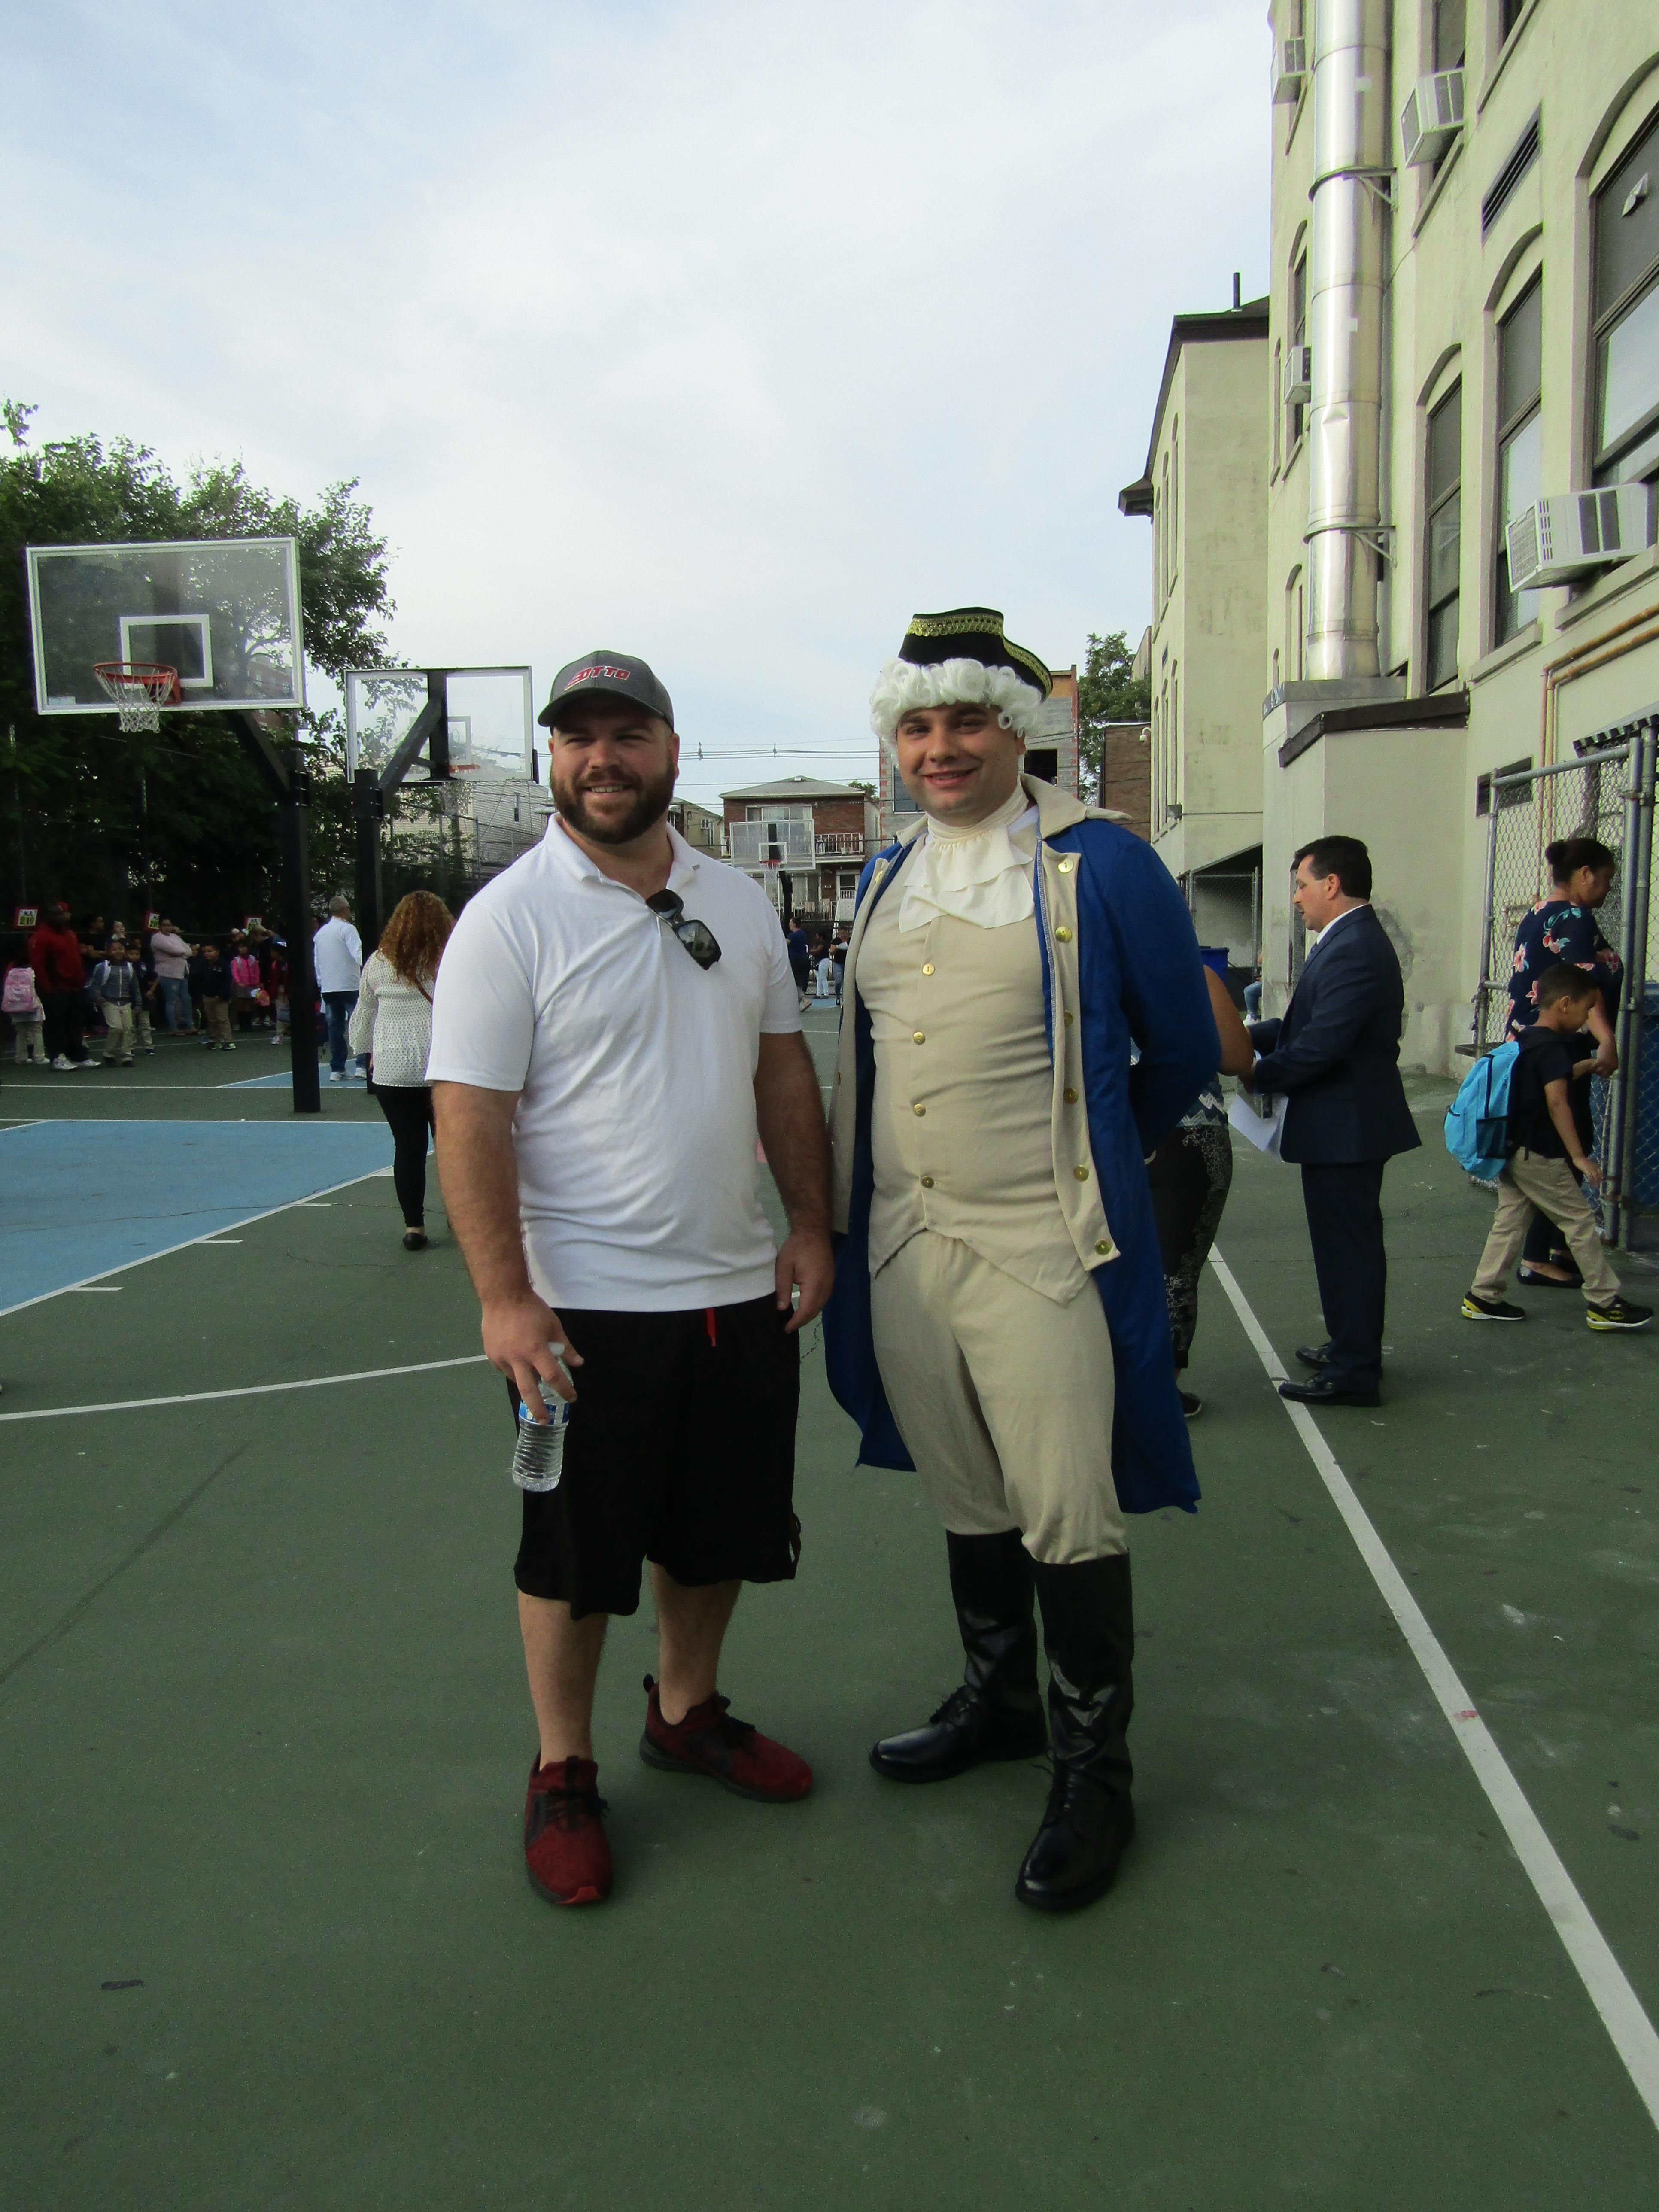 mr. blake and mr. petric dressed as Thomas Jefferson